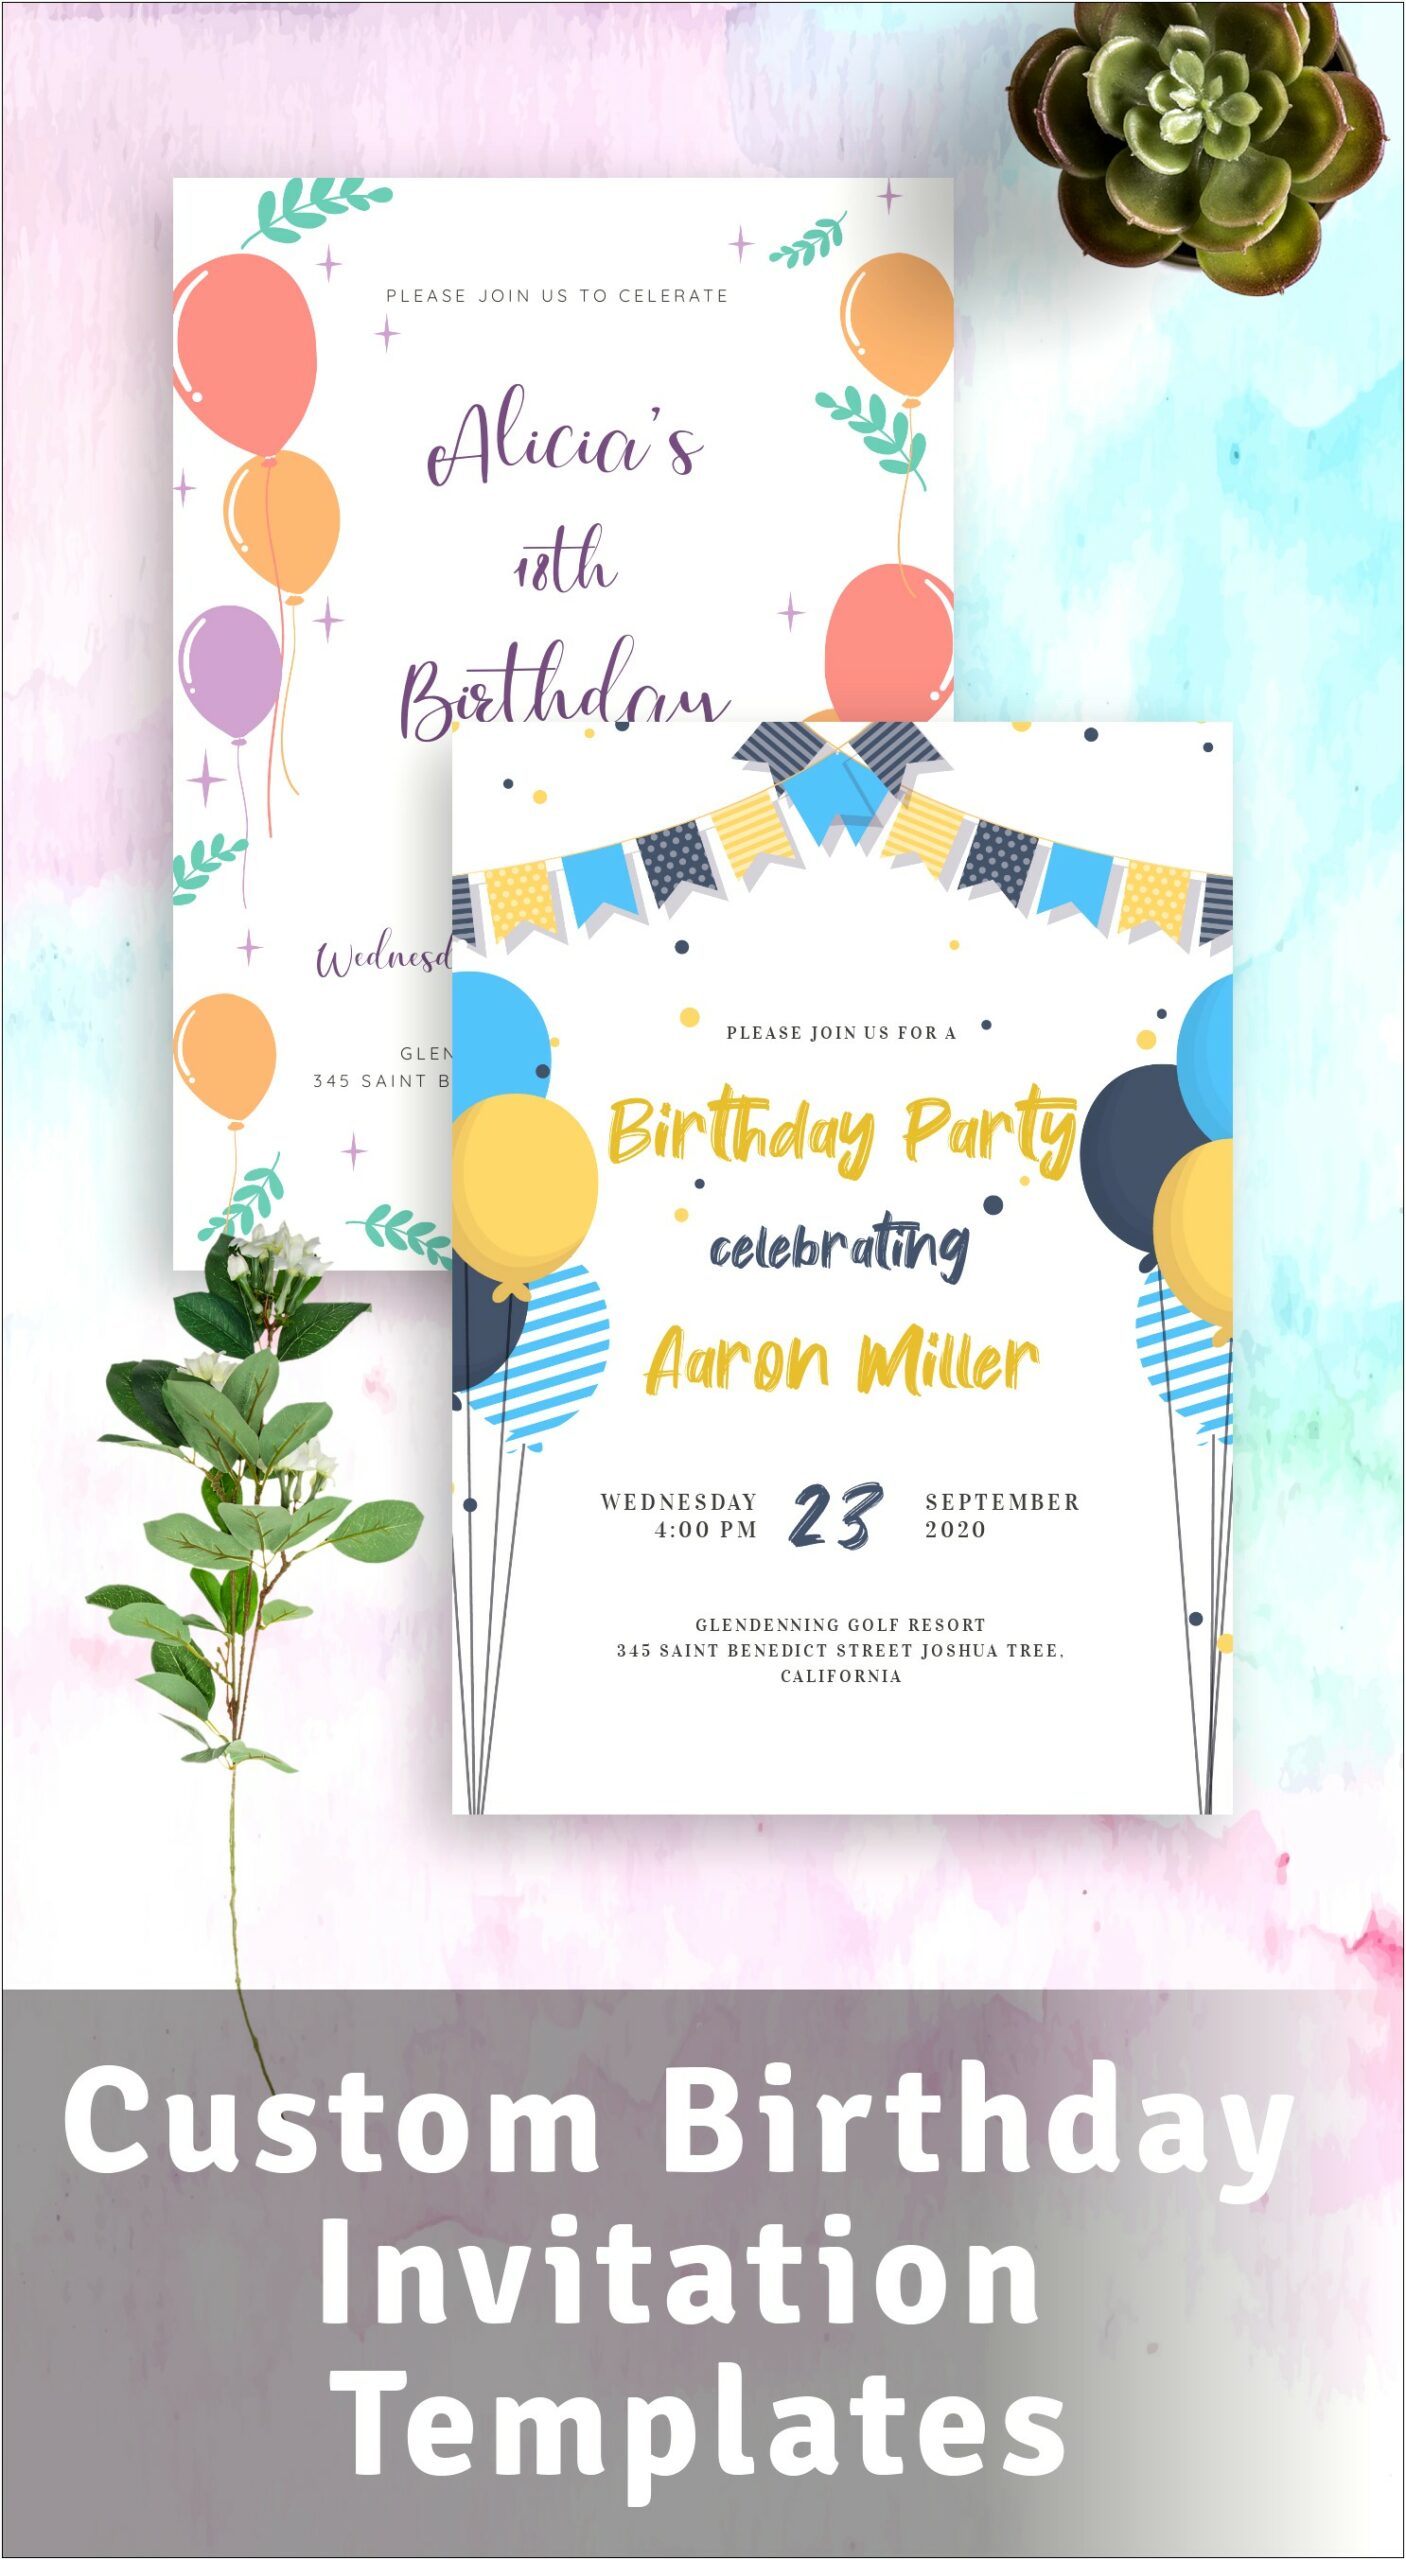 Little Man Birthday Invitation Template Free Online